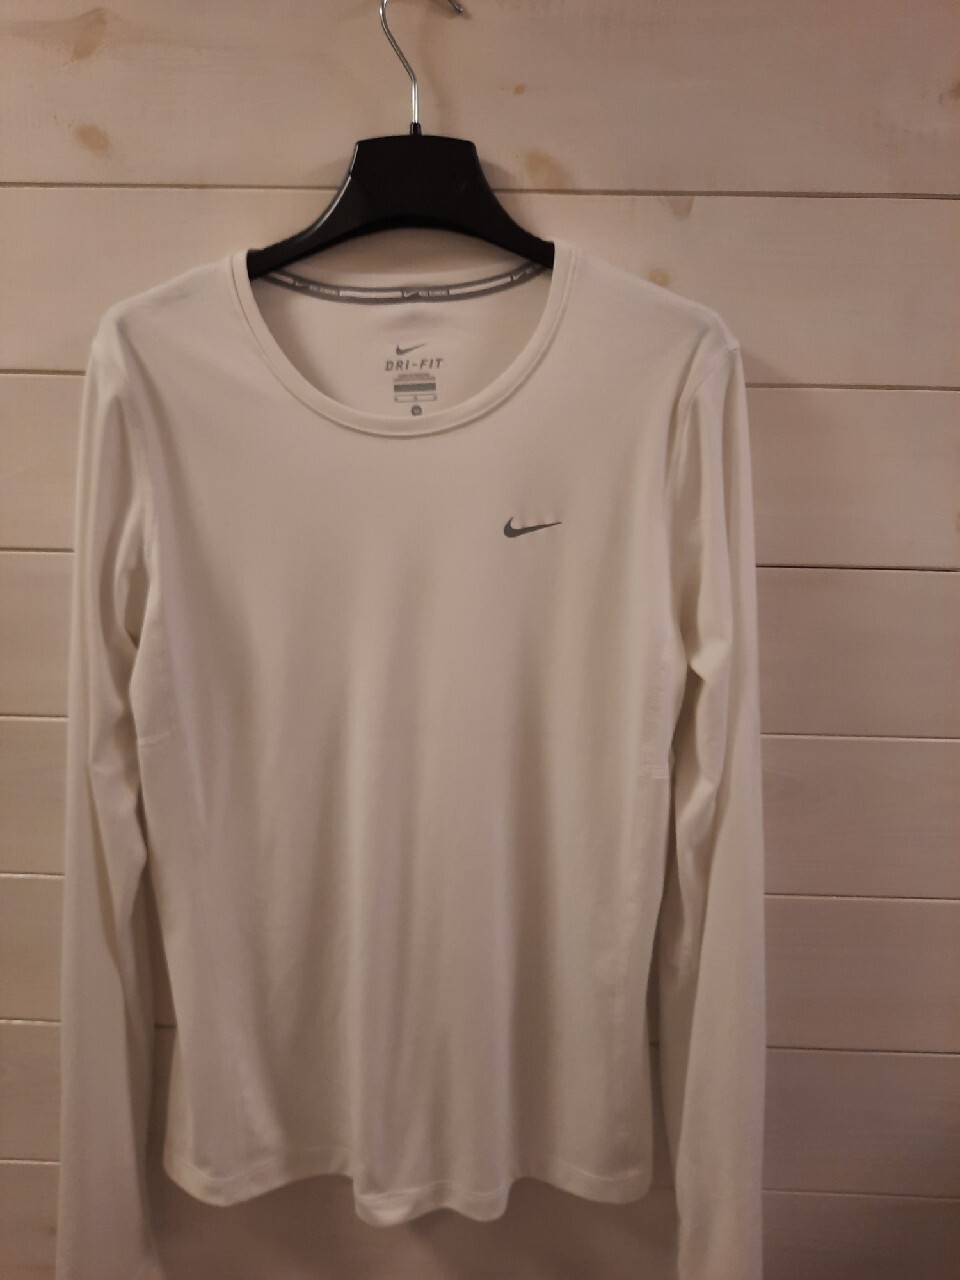 Zdjęcie oferty: Koszulka damska, bluzka Nike Running. M